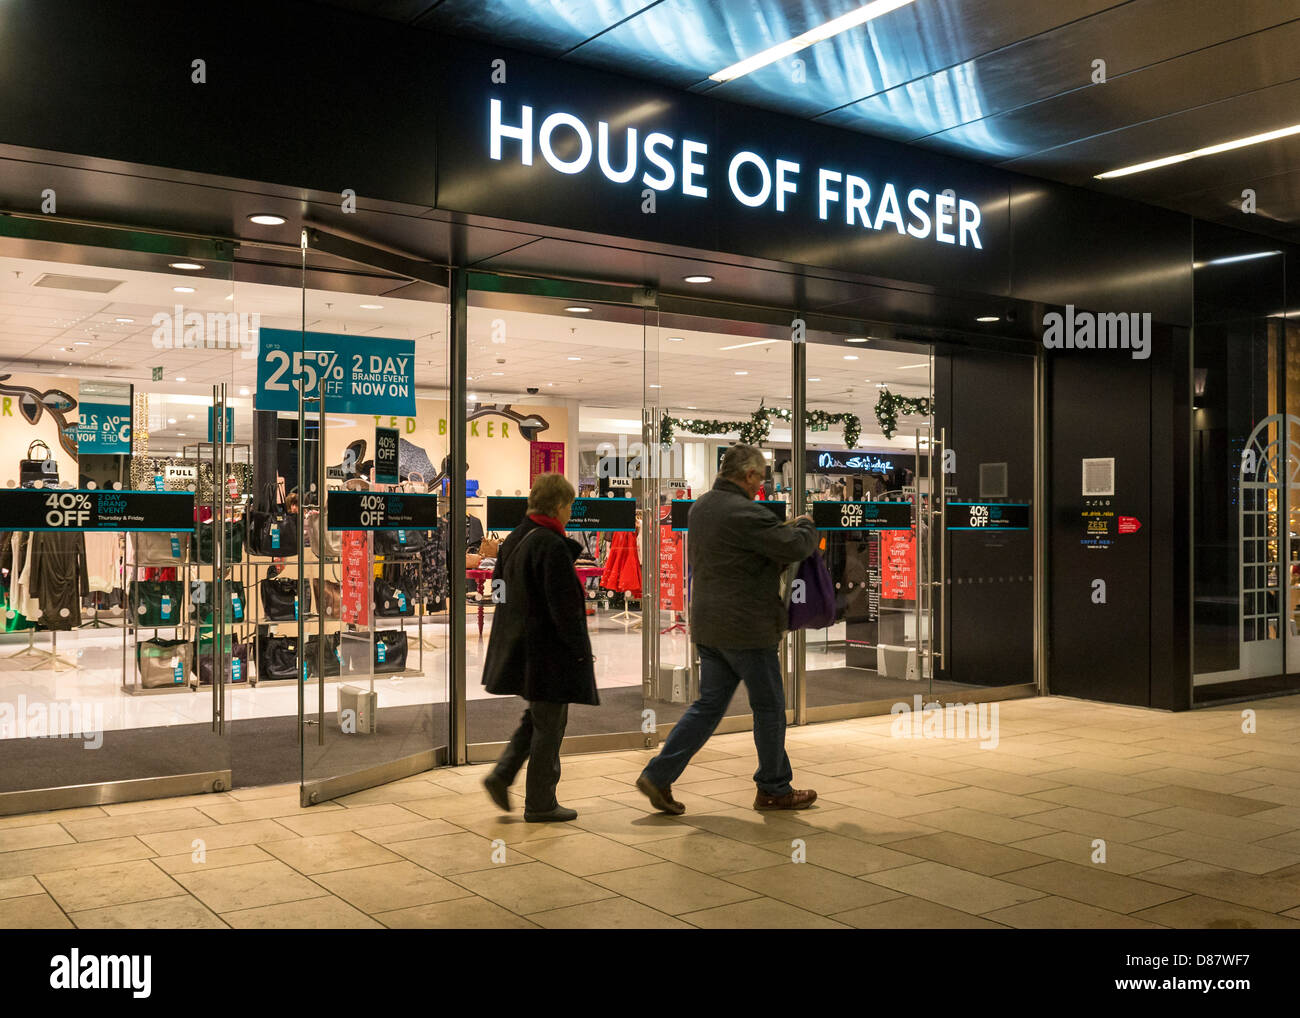 Casa de Fraser department store, Inglaterra, Reino Unido. Foto de stock